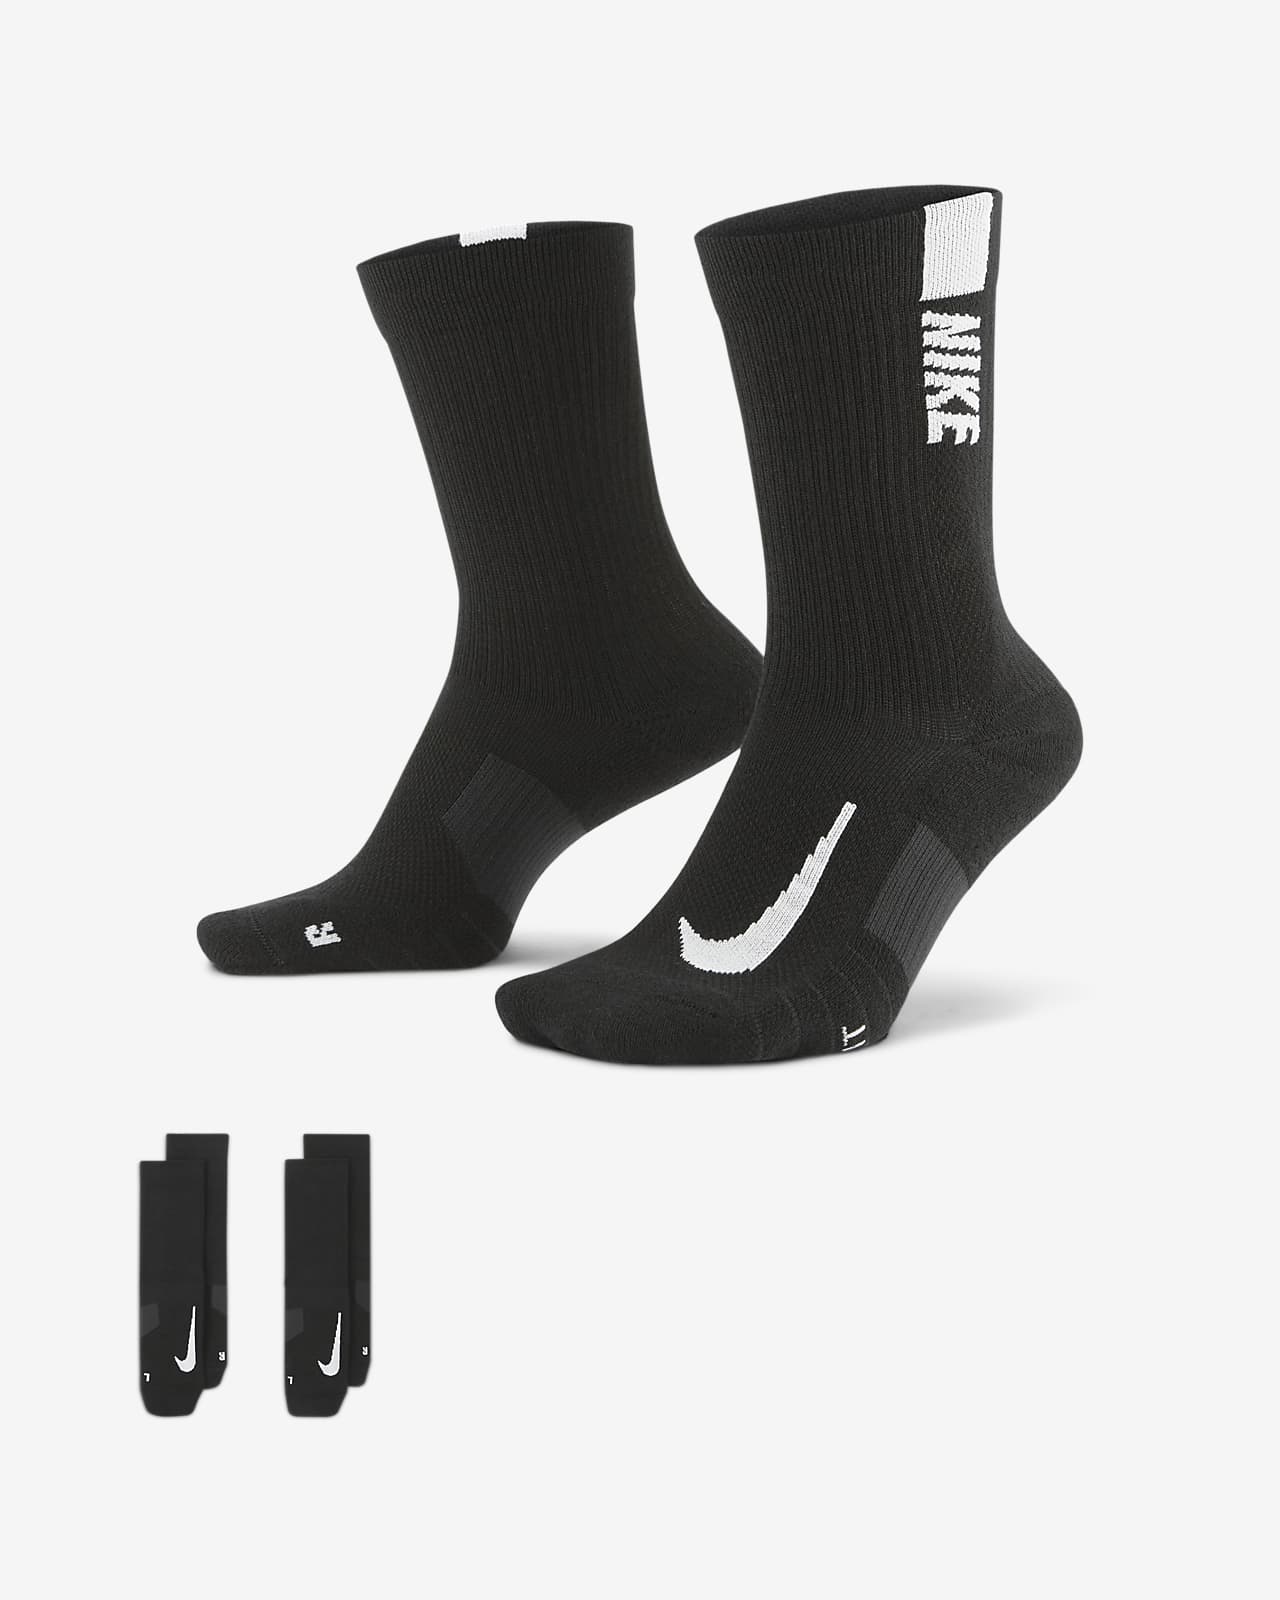 Calcetas Nike Multiplier (2 pares). Nike MX